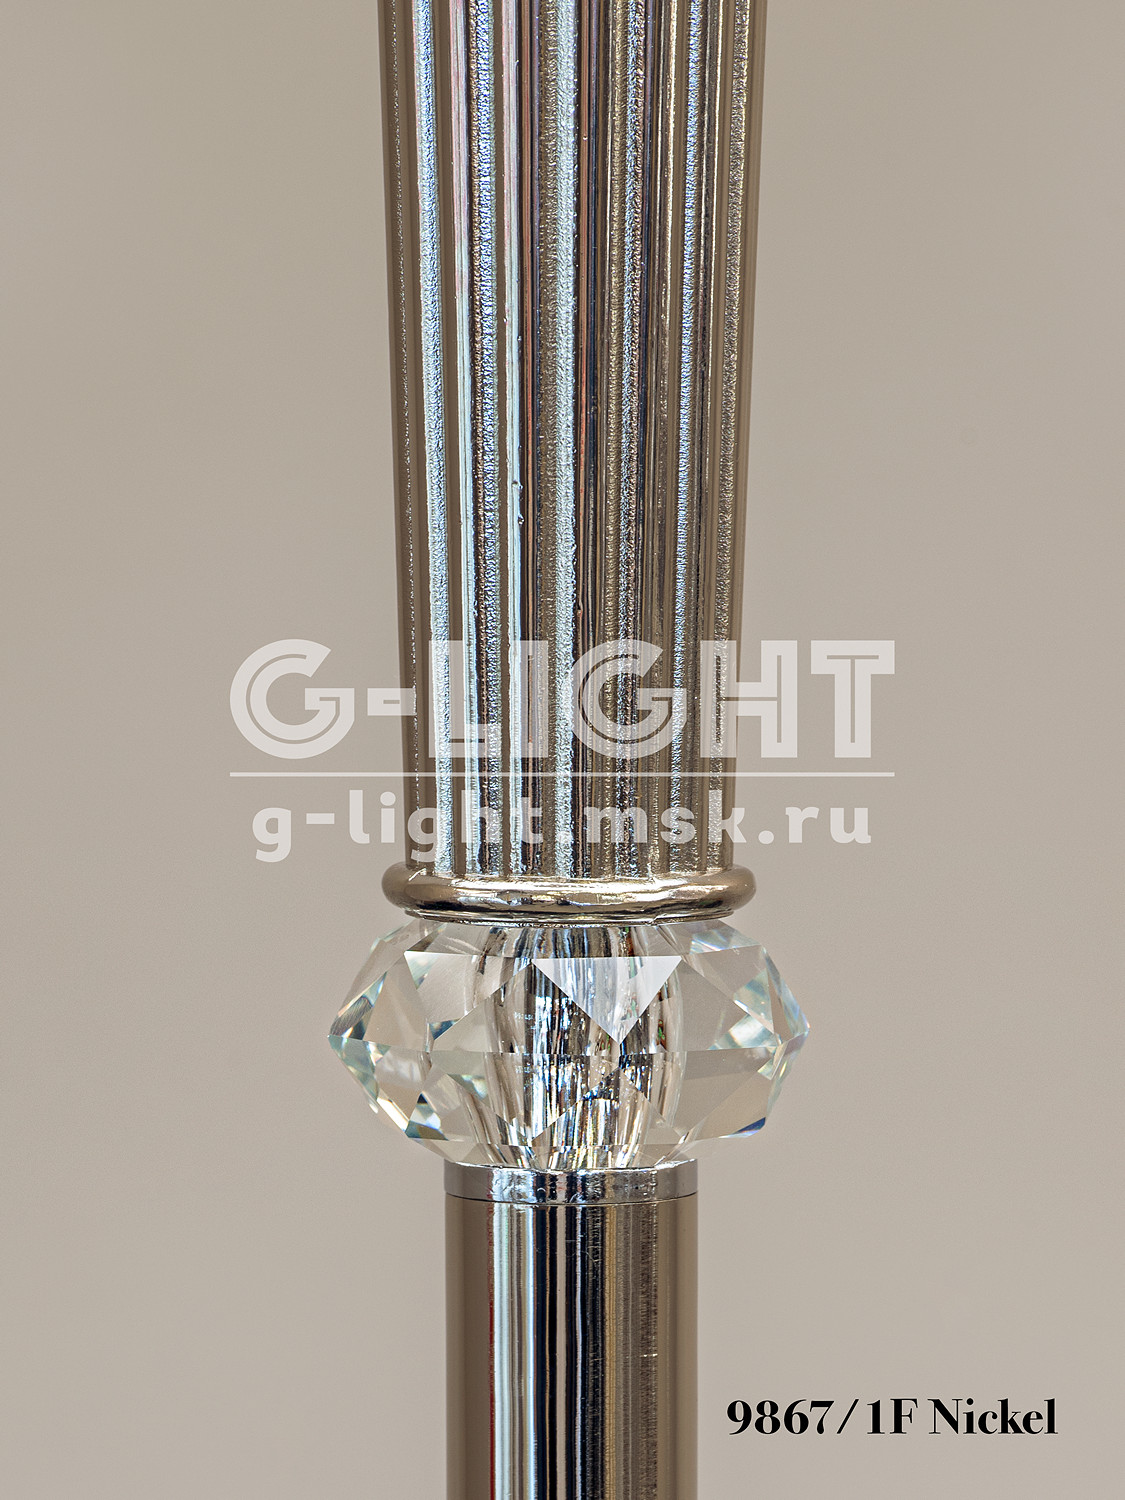 Торшер G-Light 9867/1F Nickel - изображение 4